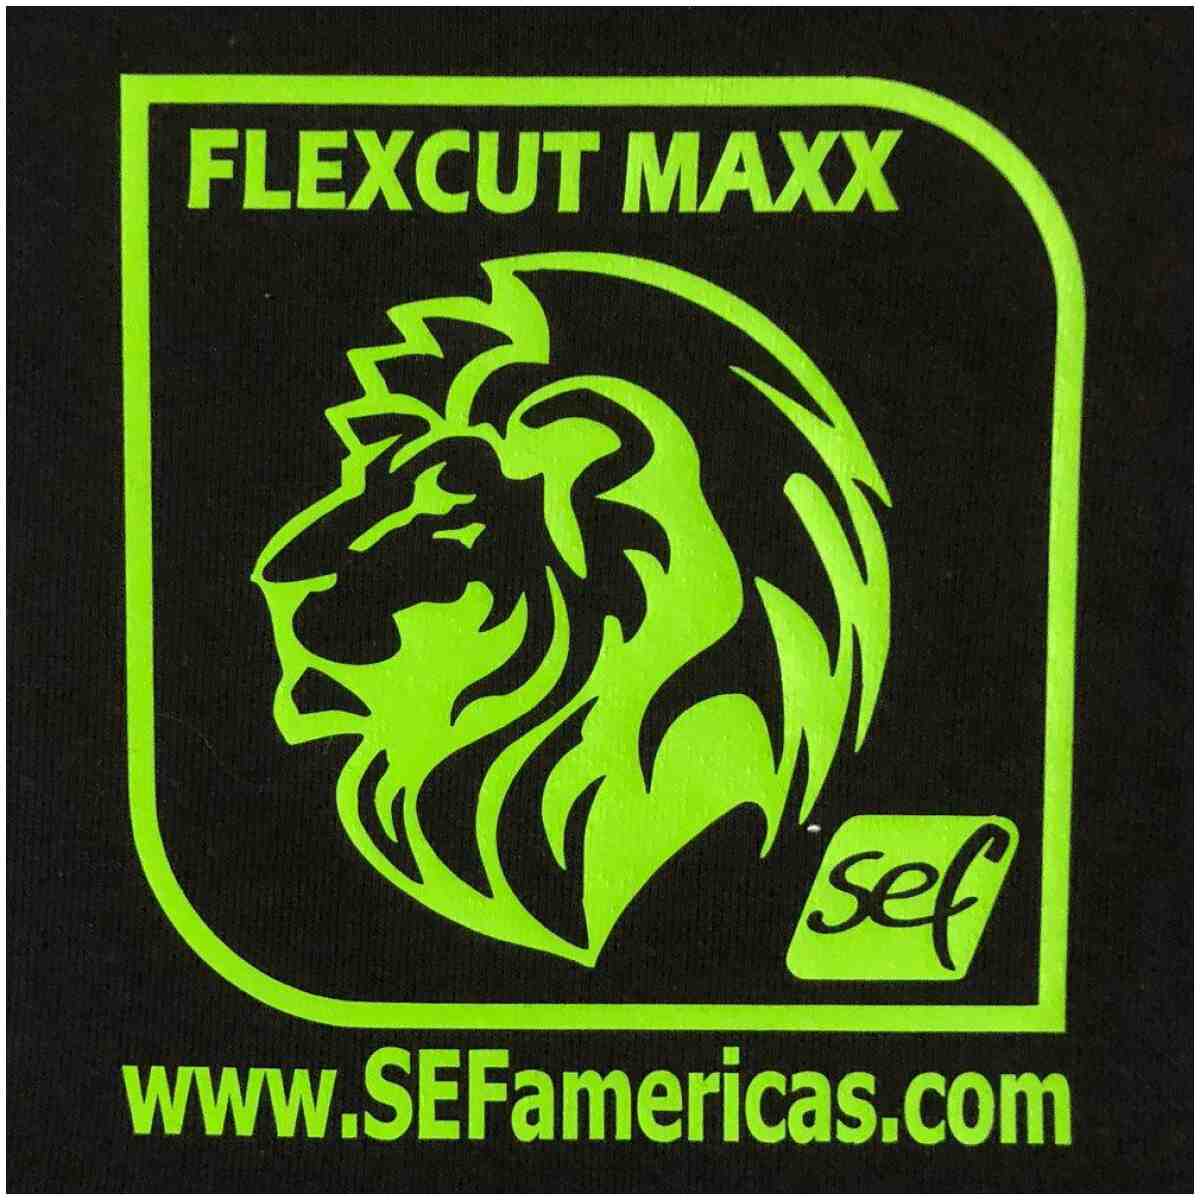 Flexcut Maxx Matt Finish Heat Transfer Vinyl 15" SEF AMERICA®